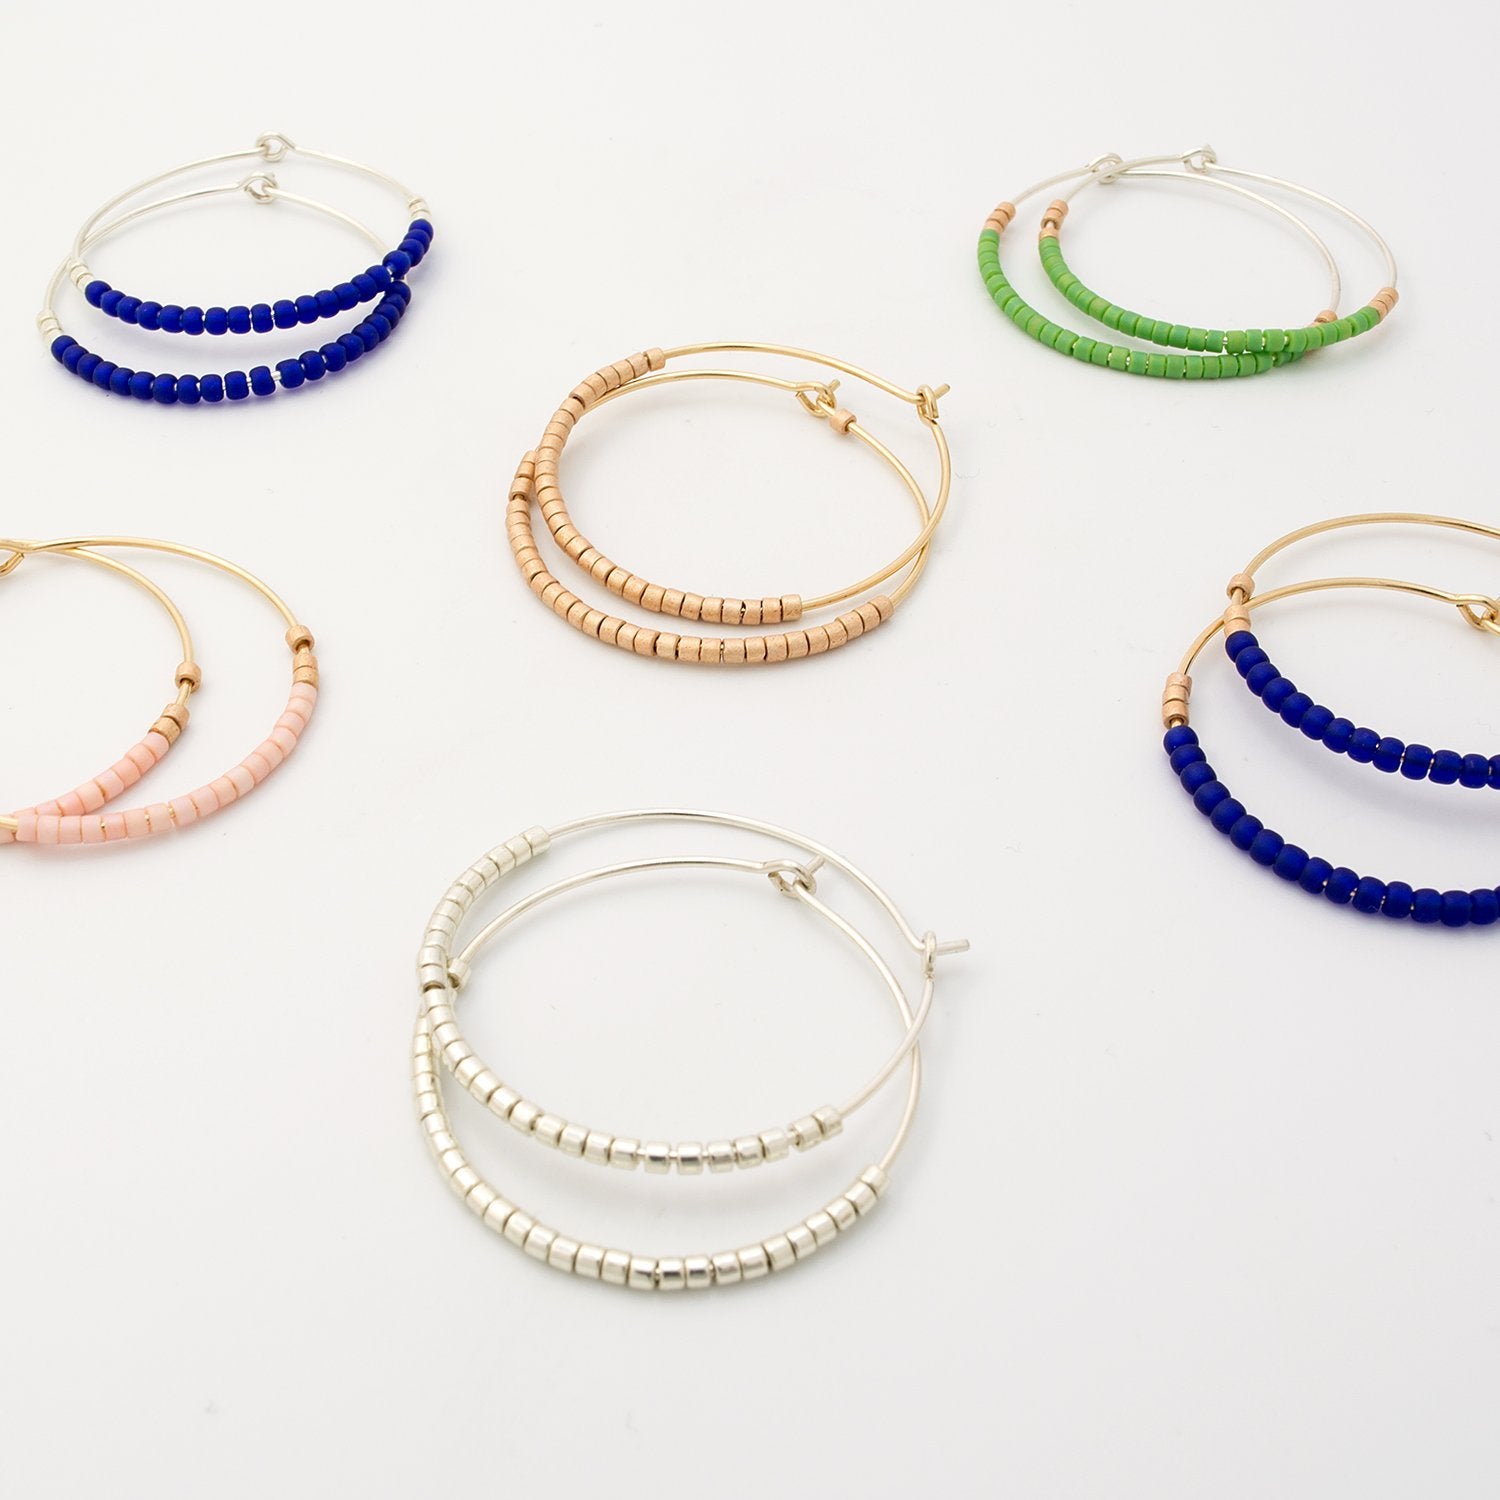 Beaded hoop earrings: green & gold - Simone Walsh Jewellery Australia